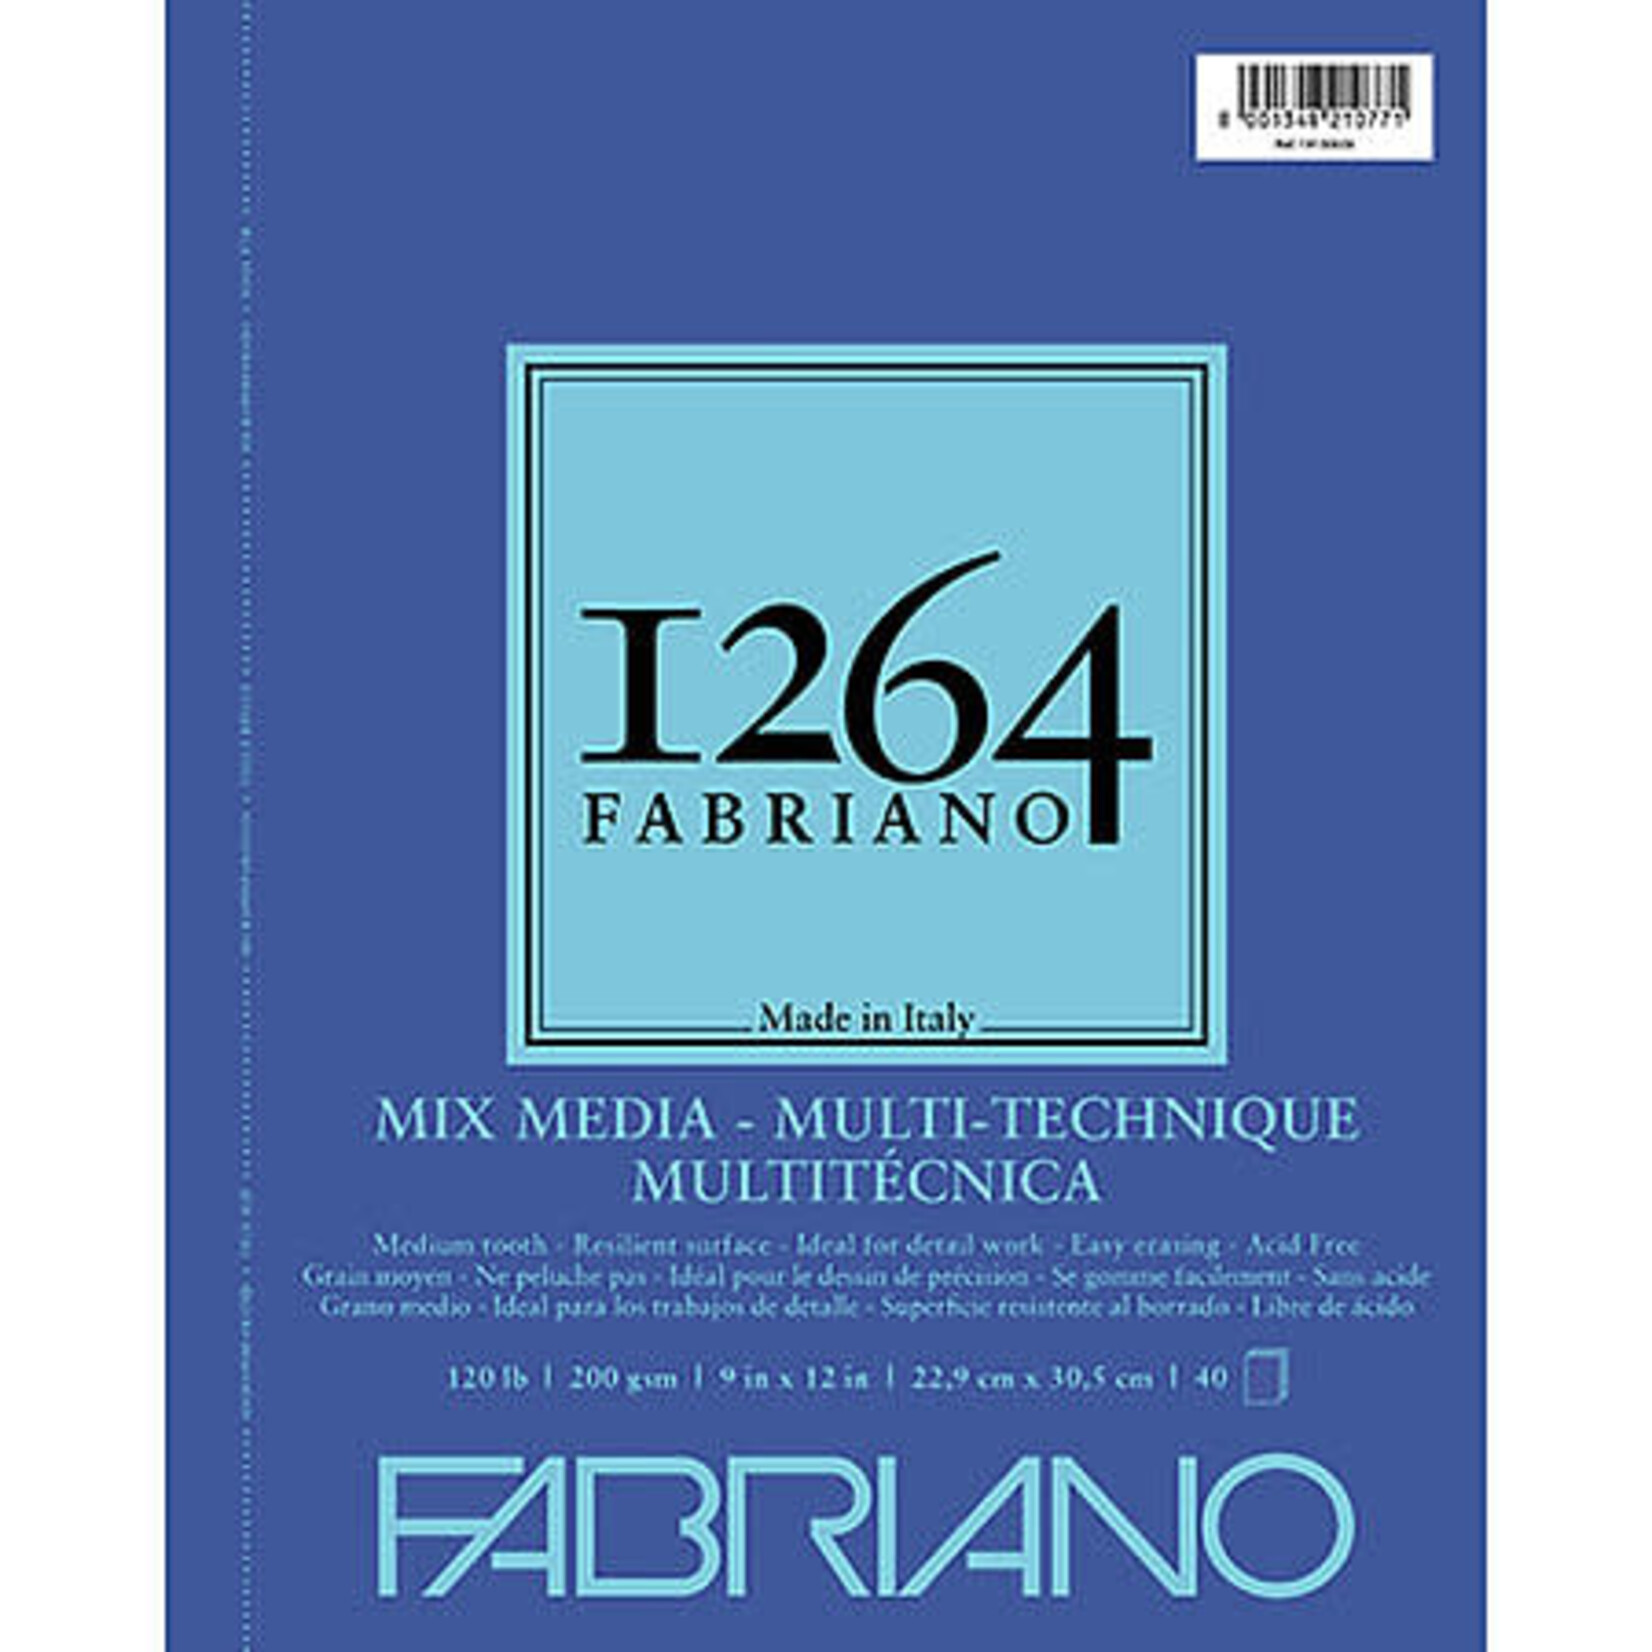 Fabriano Fabriano 1264 Mixed Media Pads, 11" x 14" - 120 lb. (200 gsm), 40 Shts./Pad